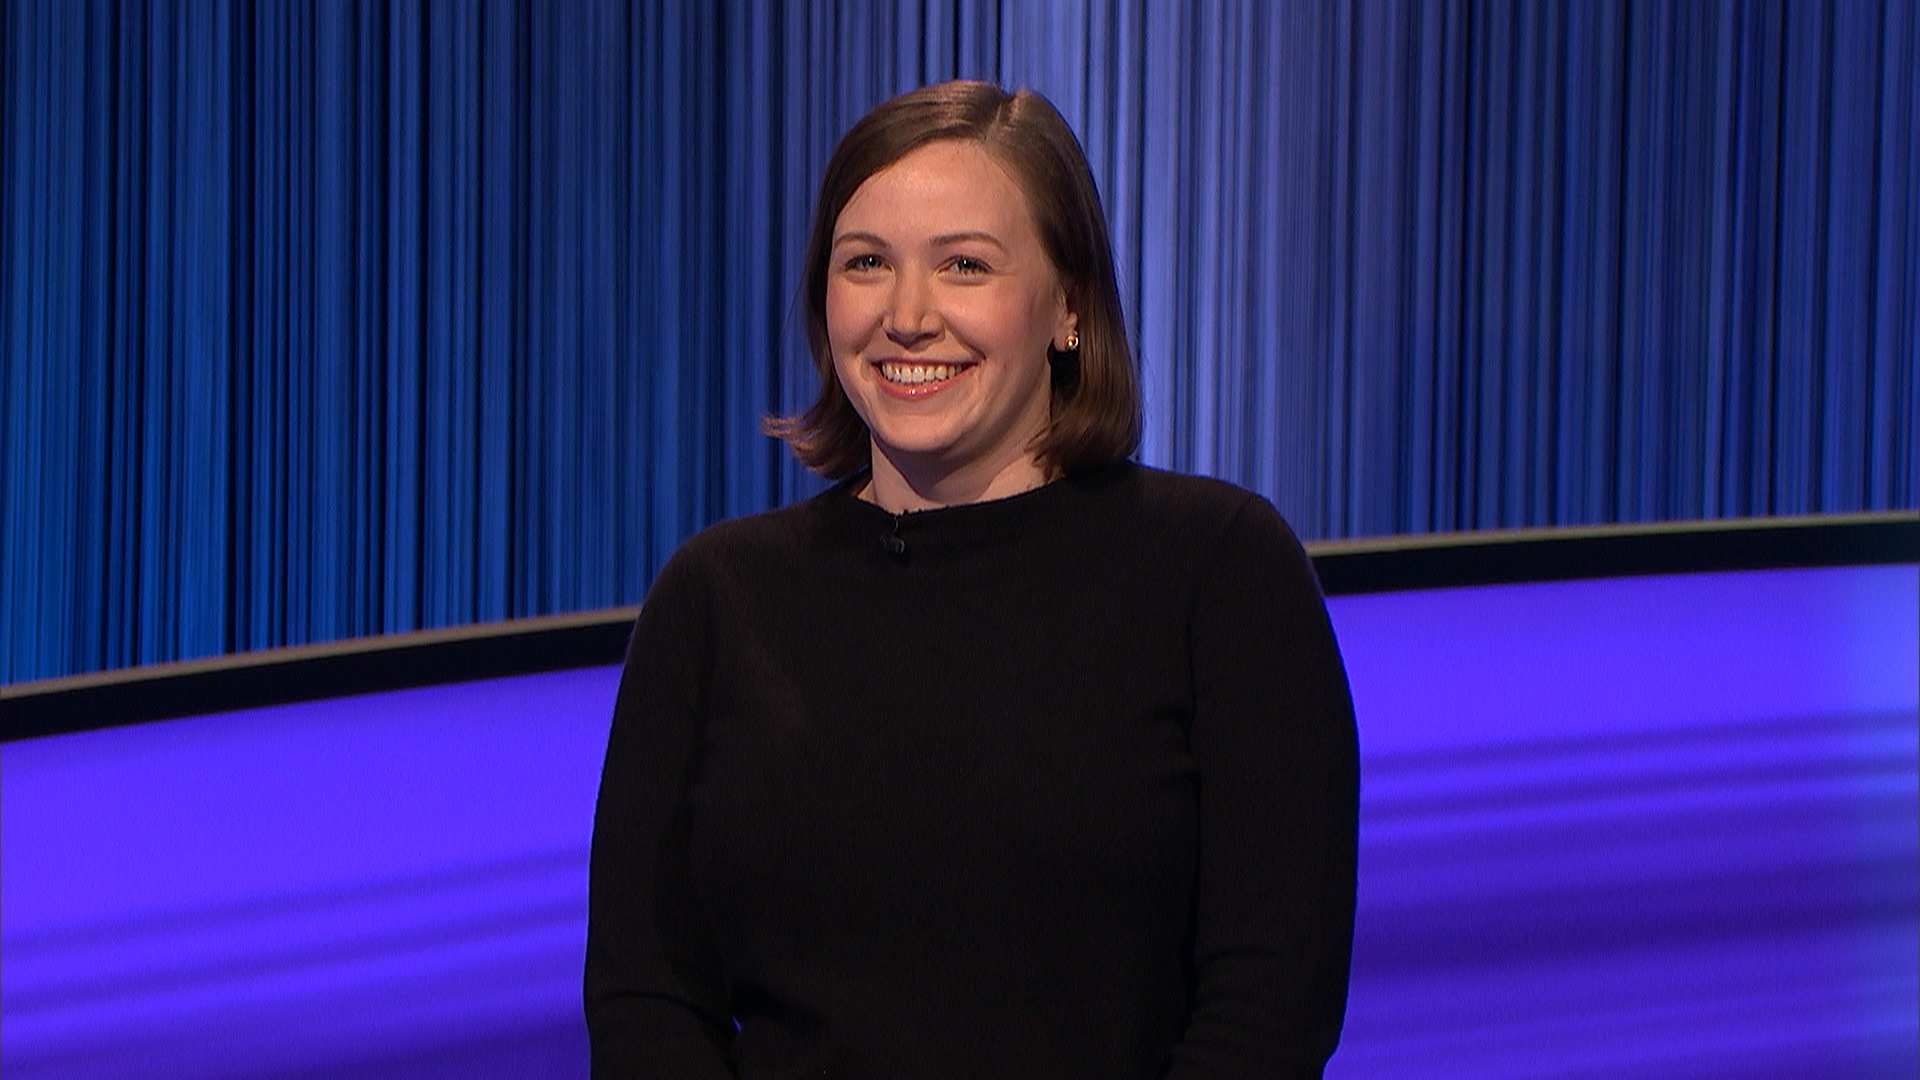 How did Milwaukee ER doctor Amy Hummel do on 'Jeopardy!' Wednesday night?